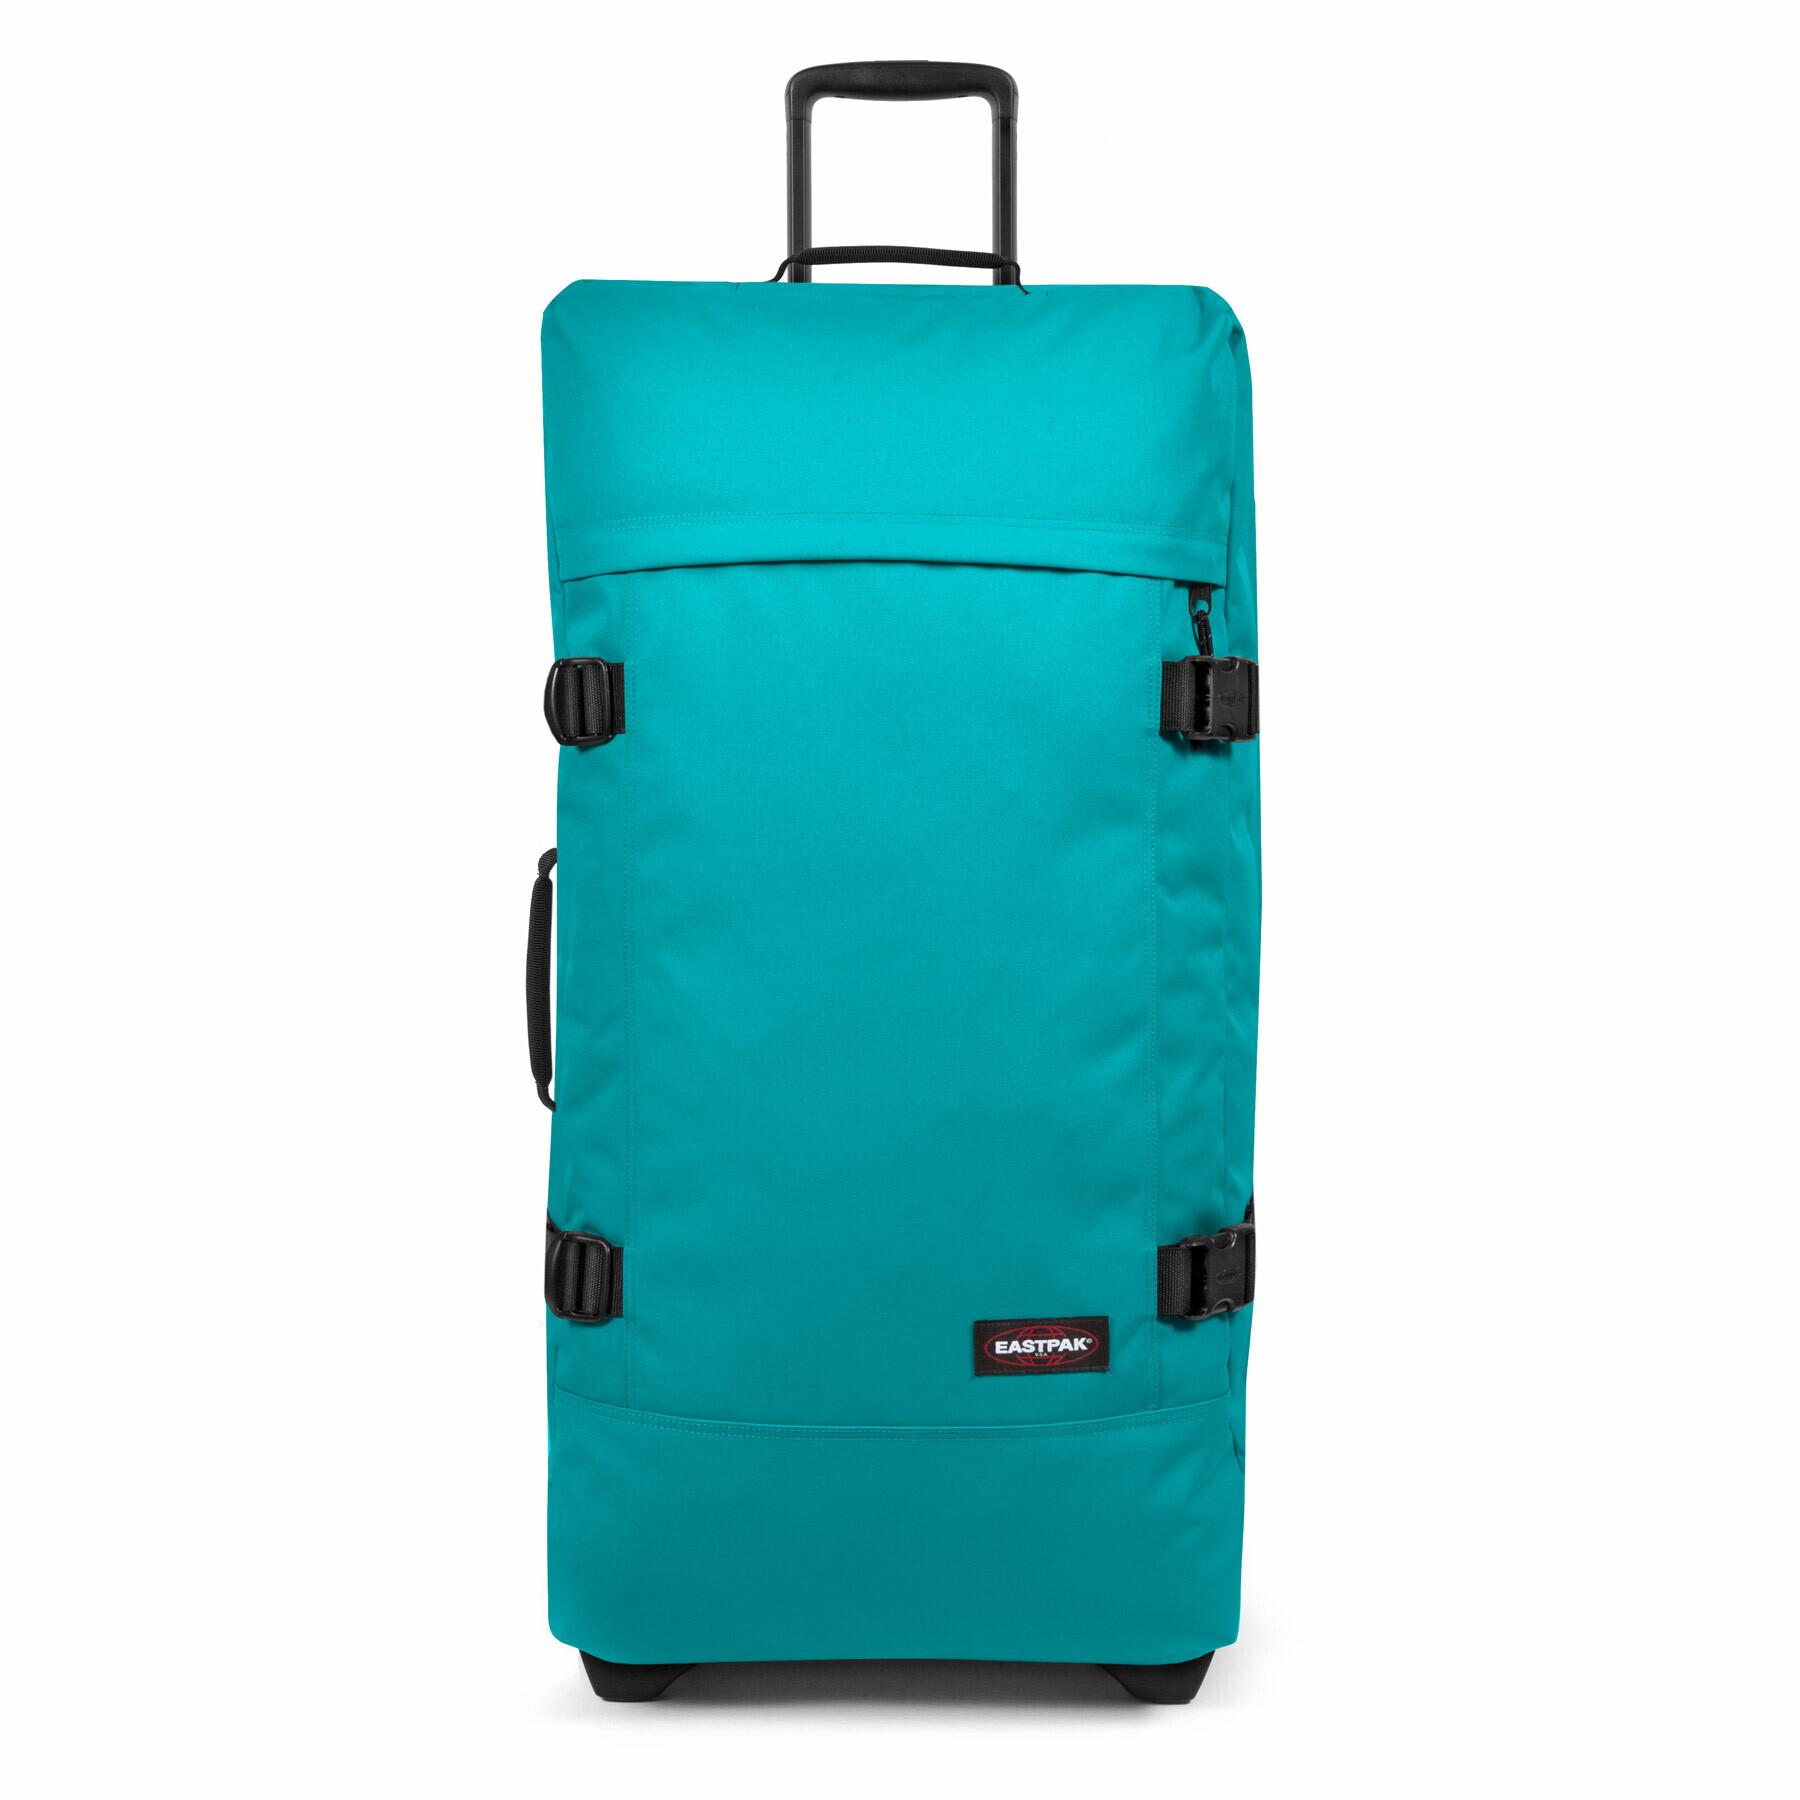 Eastpak Tranverz L suitcase